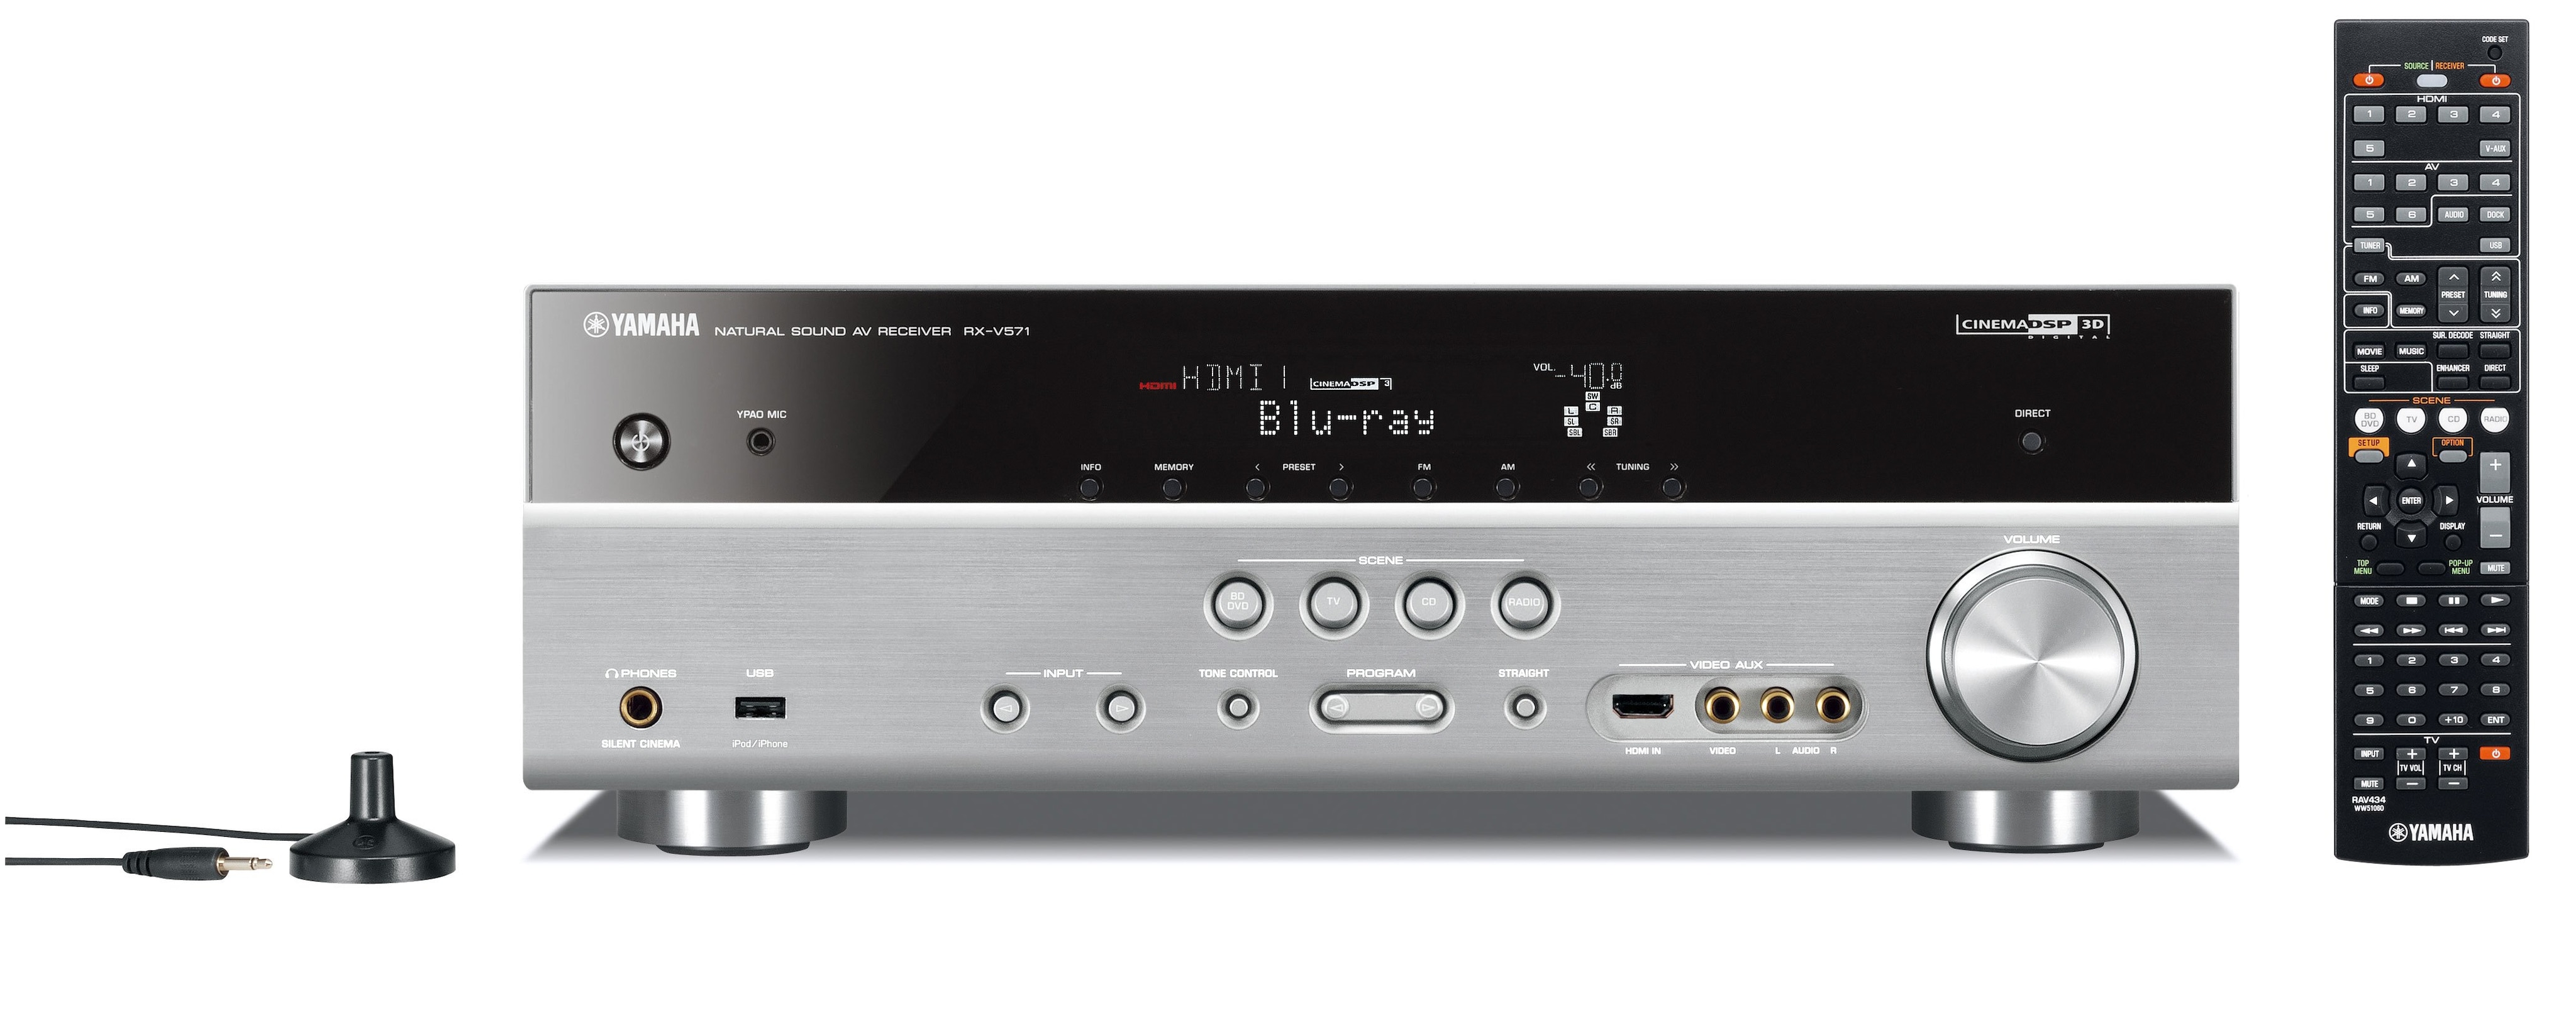 RX-V571 - Overview - AV Receivers - Audio u0026 Visual - Products - Yamaha USA